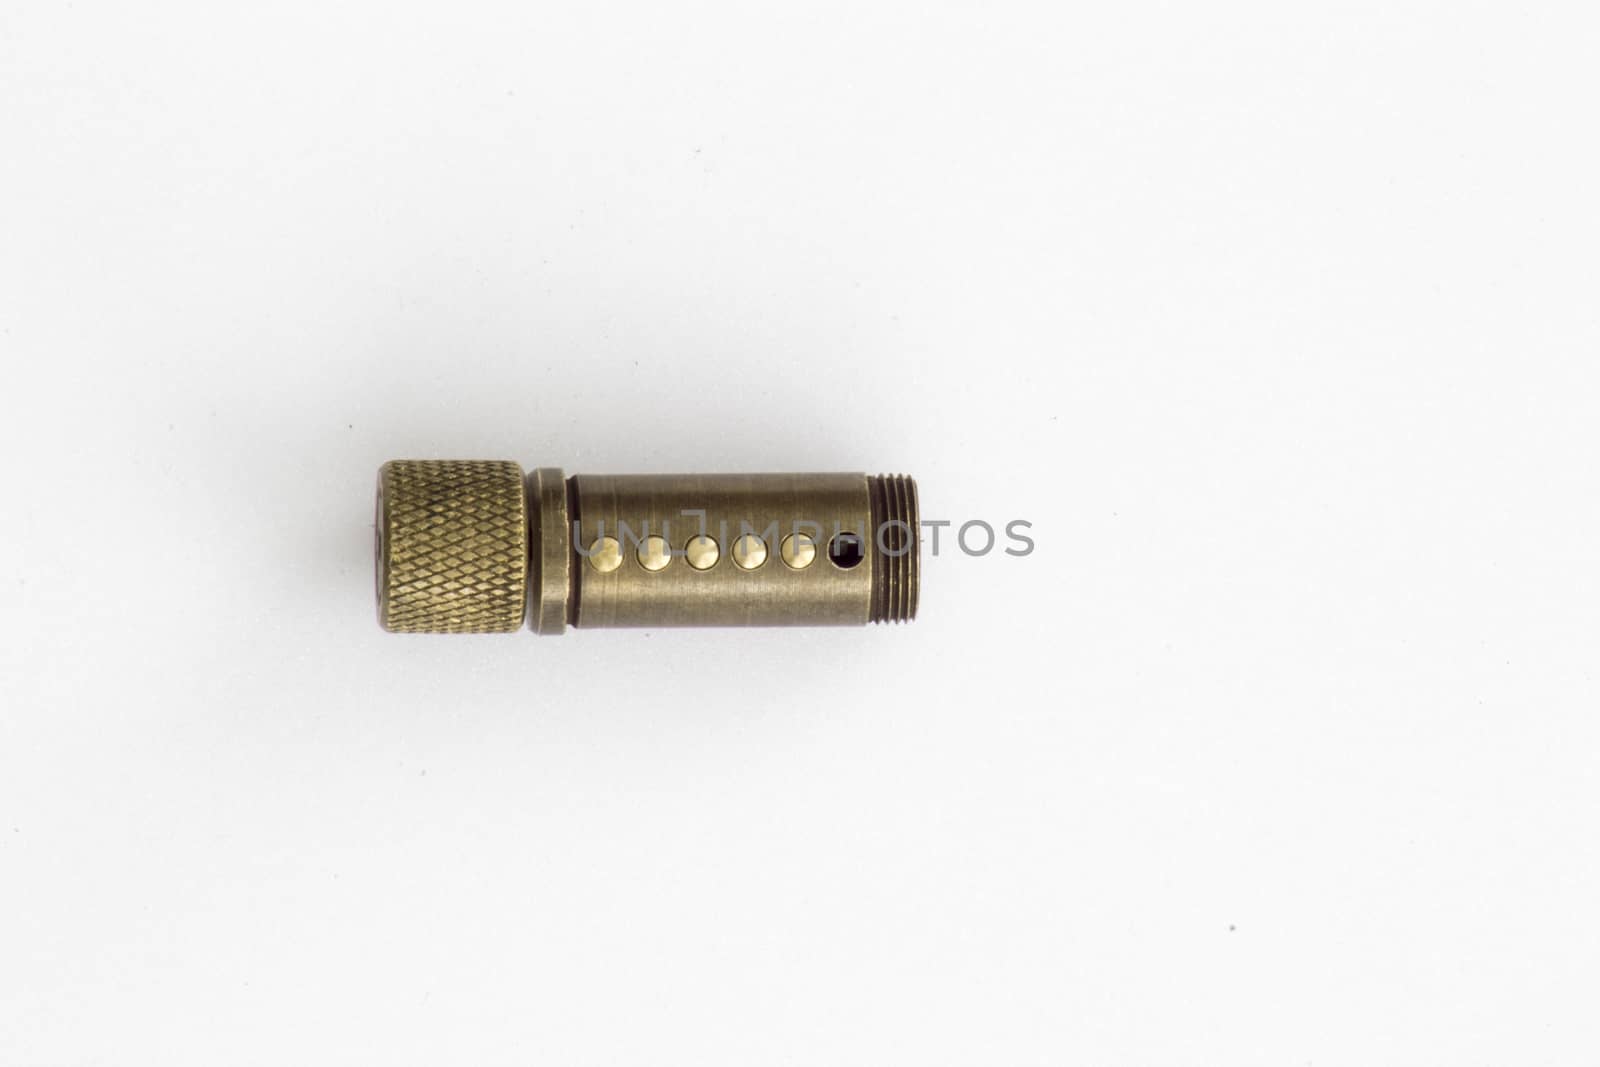 Lock cilinder with key inside 5 pins by bluiten